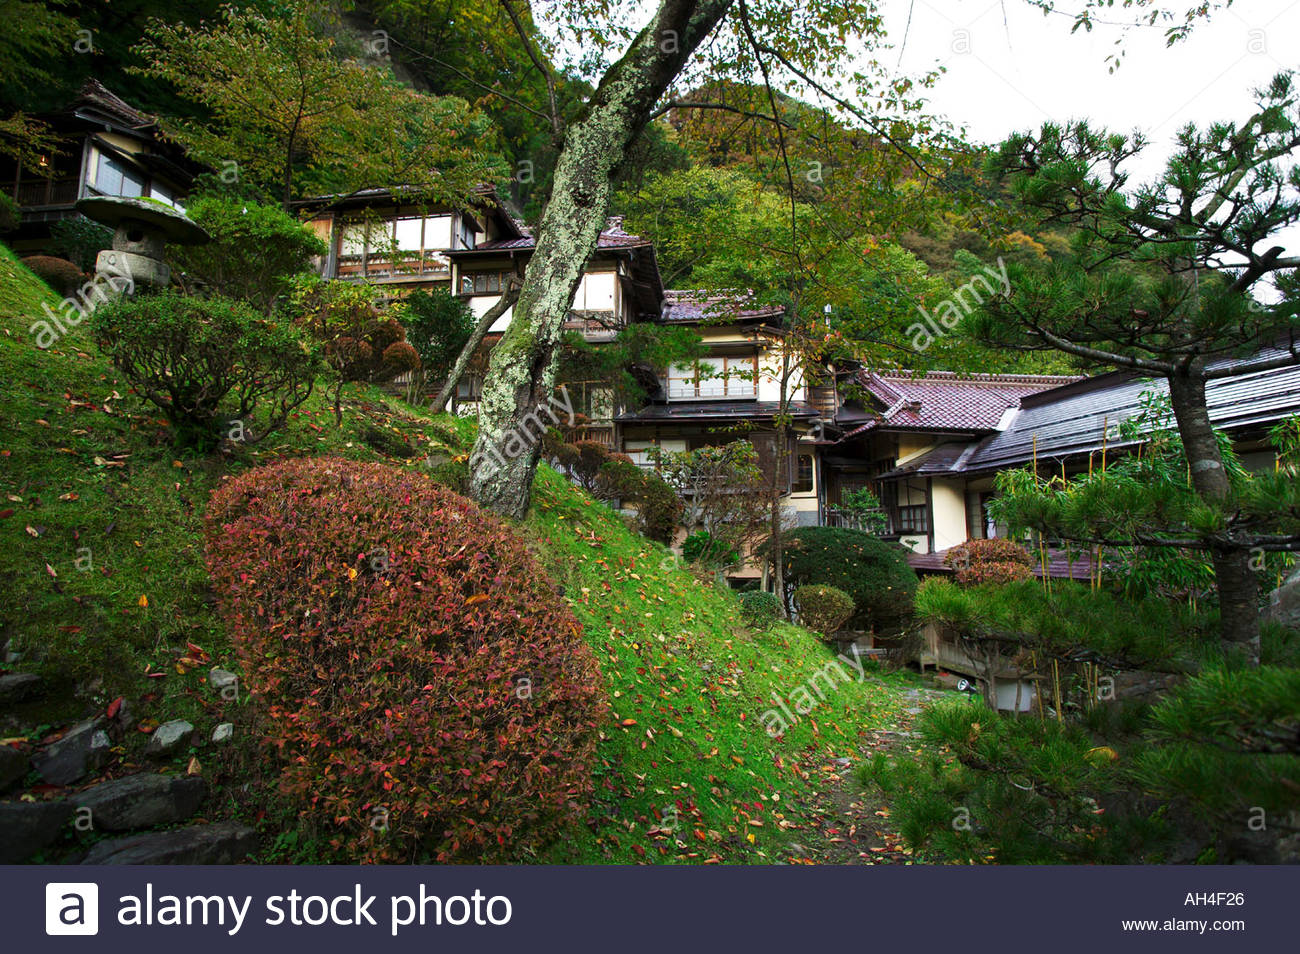 mukaitaki-ryokan-traditional-japanese-inn-wood-construction-building-AH4F26.jpg